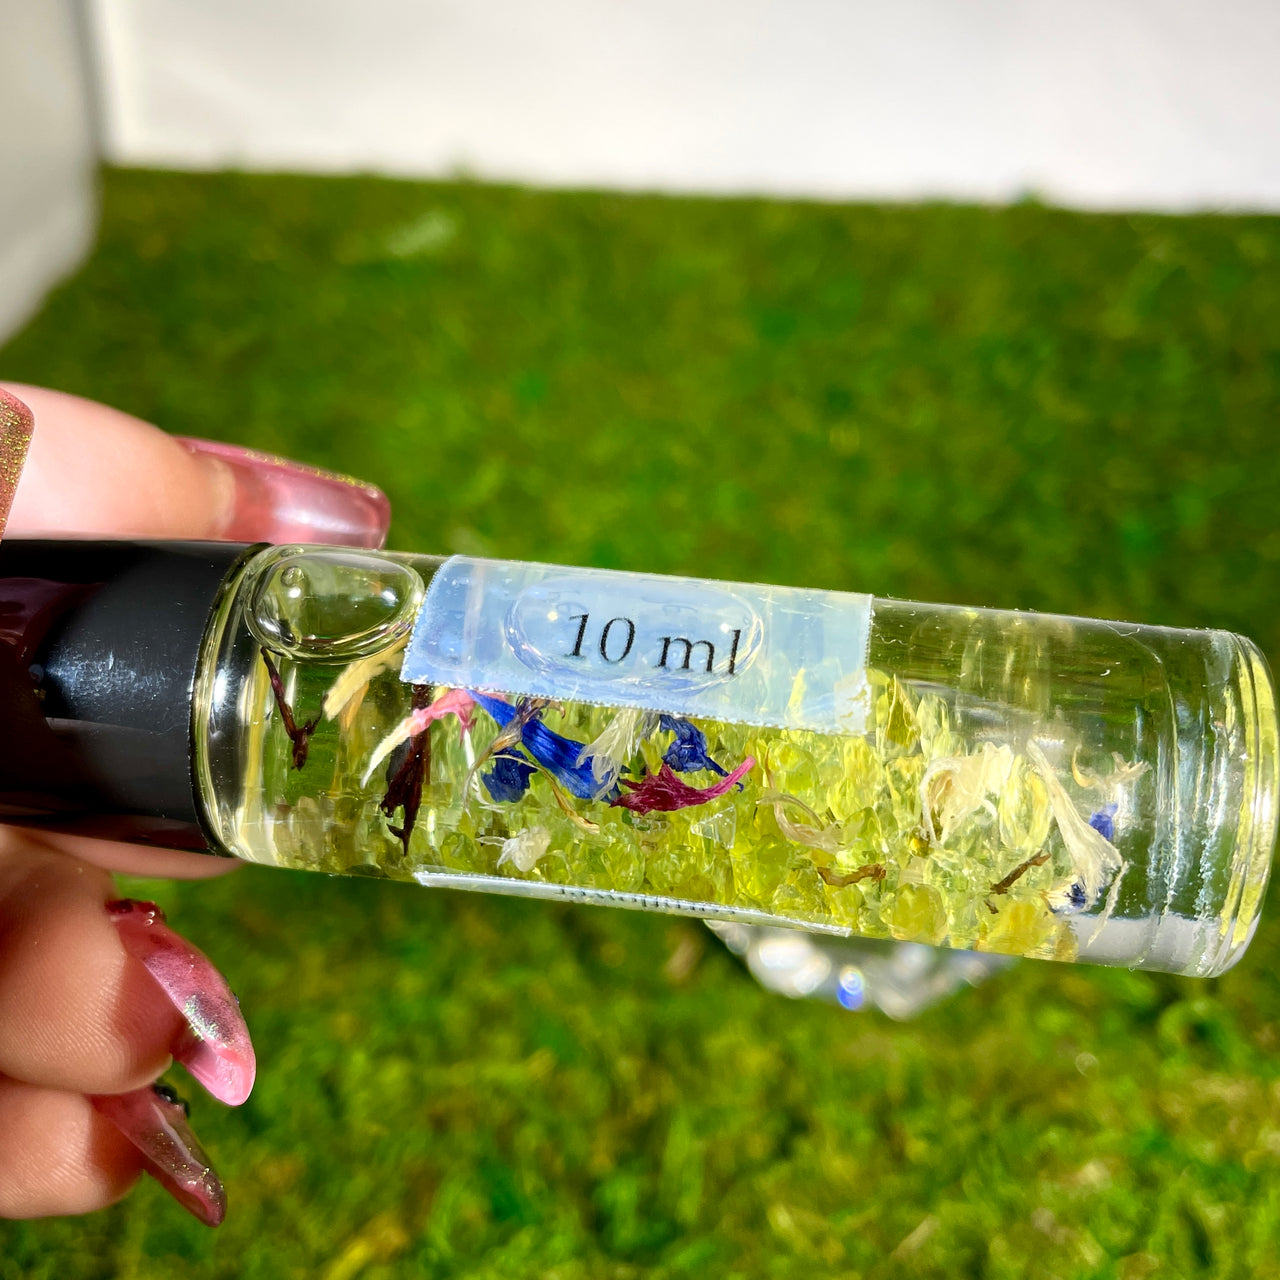 Crystal Perfume 10ml Roller #Q217